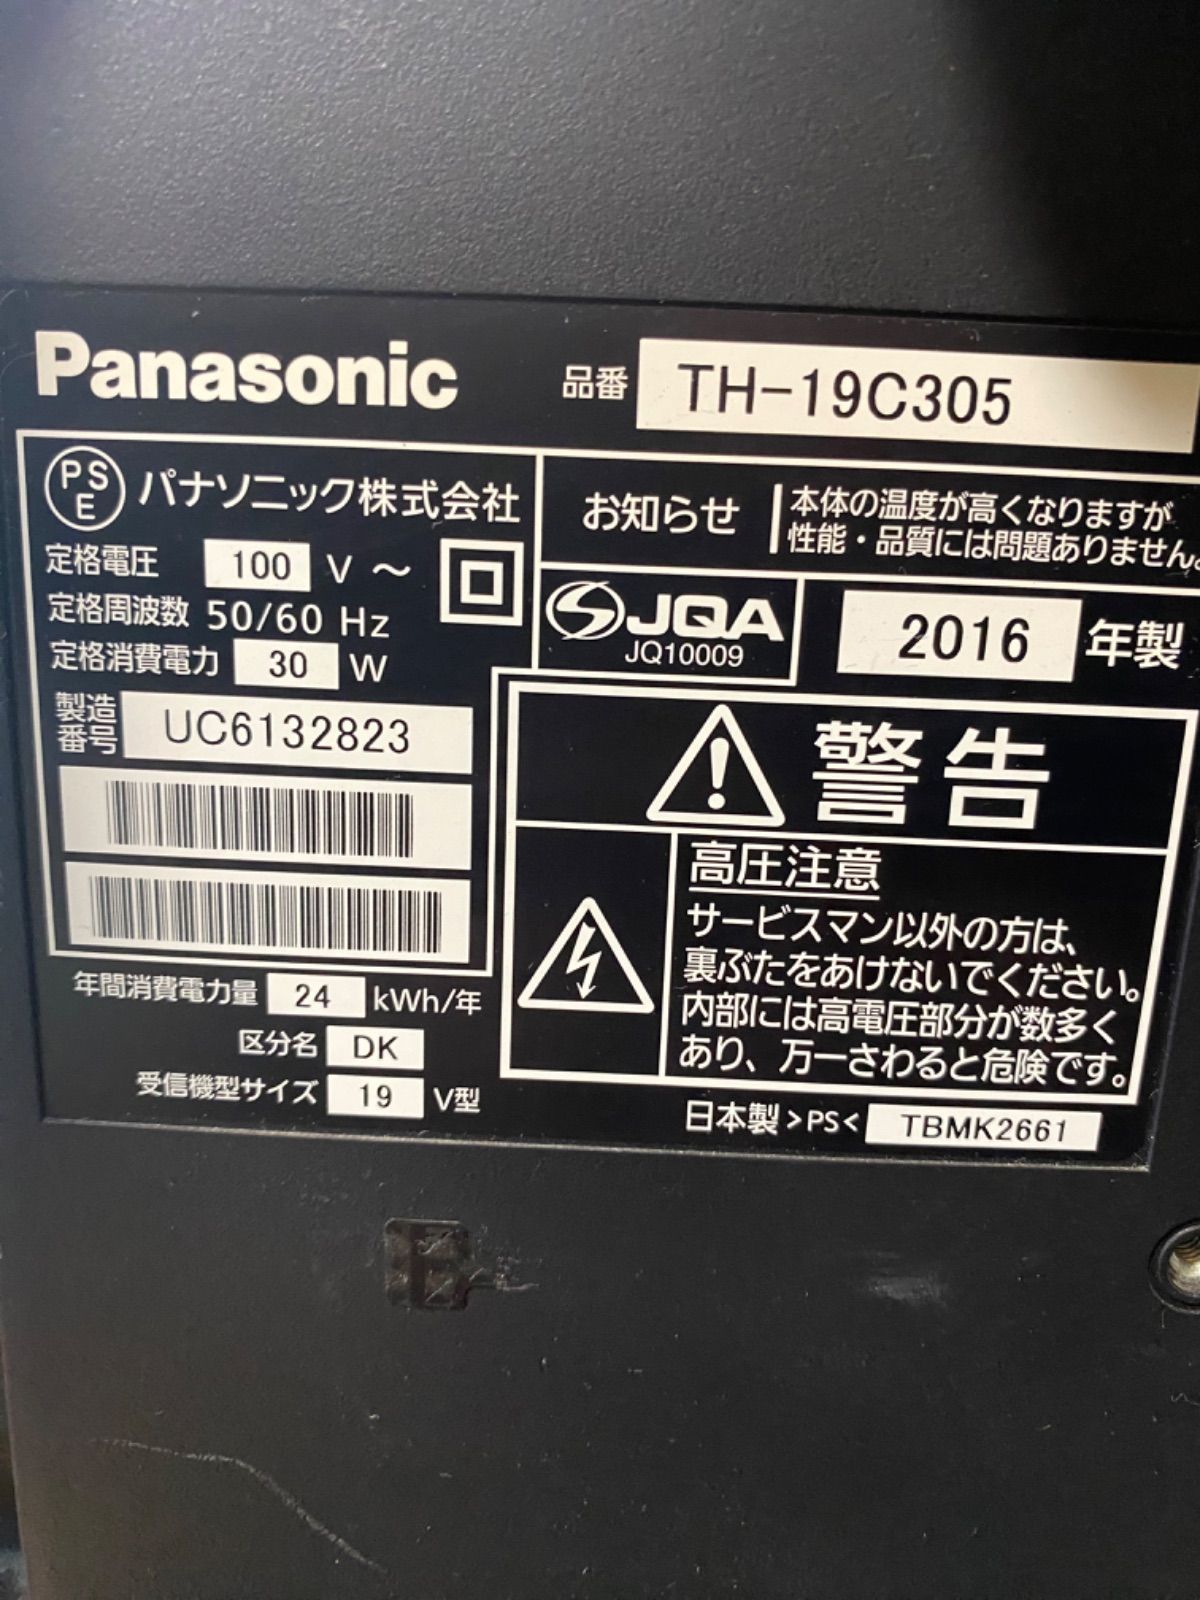 Panasonic 19インチ テレビ VIERA C305 TH-19C305 - まみの部屋 - メルカリ